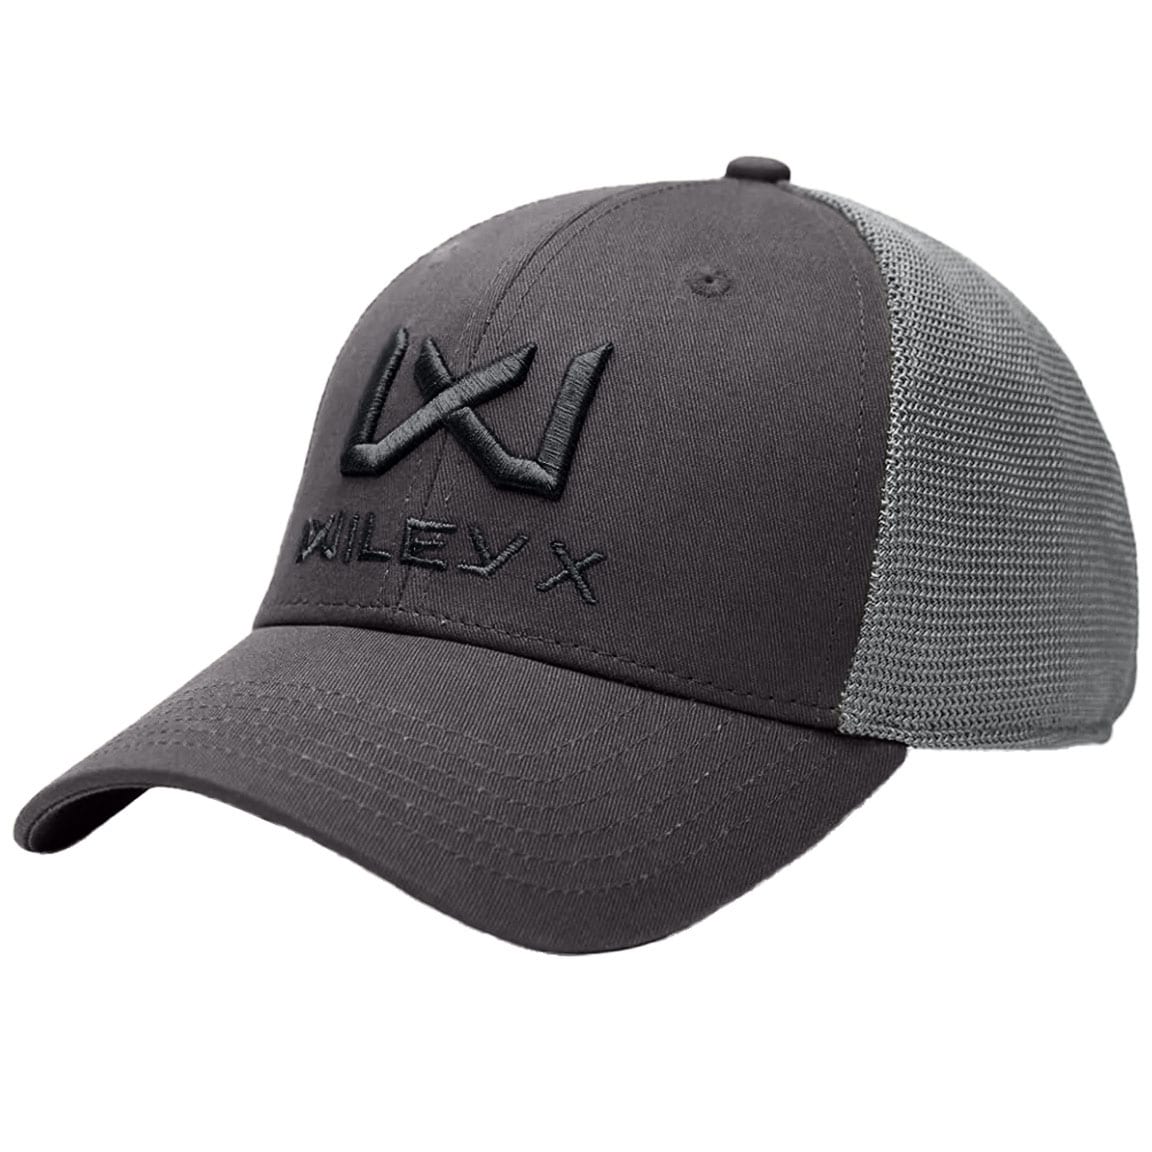 Бейсболка Wiley X Trucker Cap - Dark Grey/Black WX